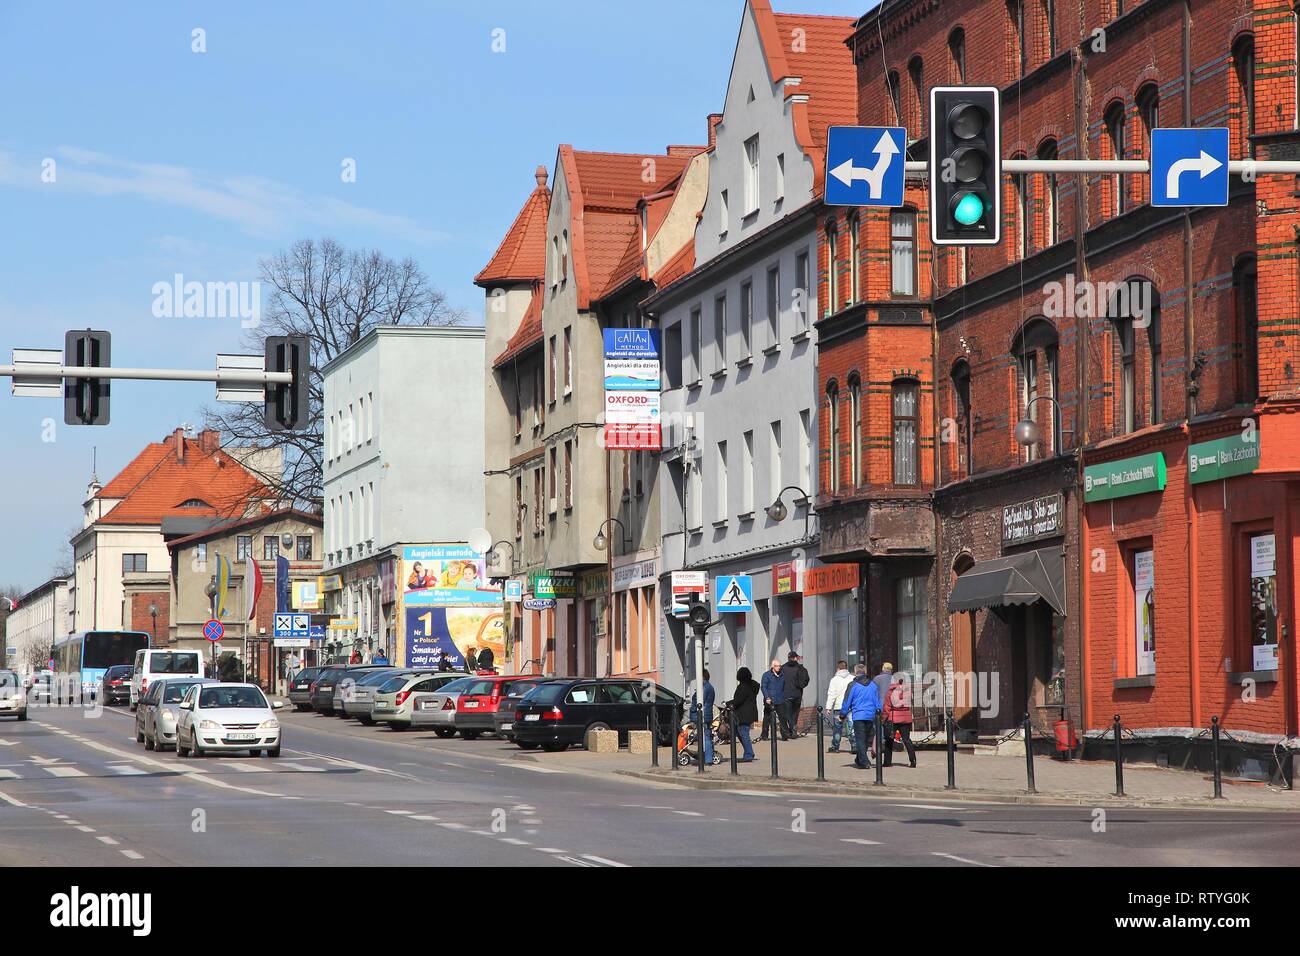 PIEKARY SLASKIE, POLAND - MARCH 9, 2015: People walk in Piekary Slaskie, Poland. Piekary Slaskie is an important city in Slaskie region. It has 54,783 Stock Photo